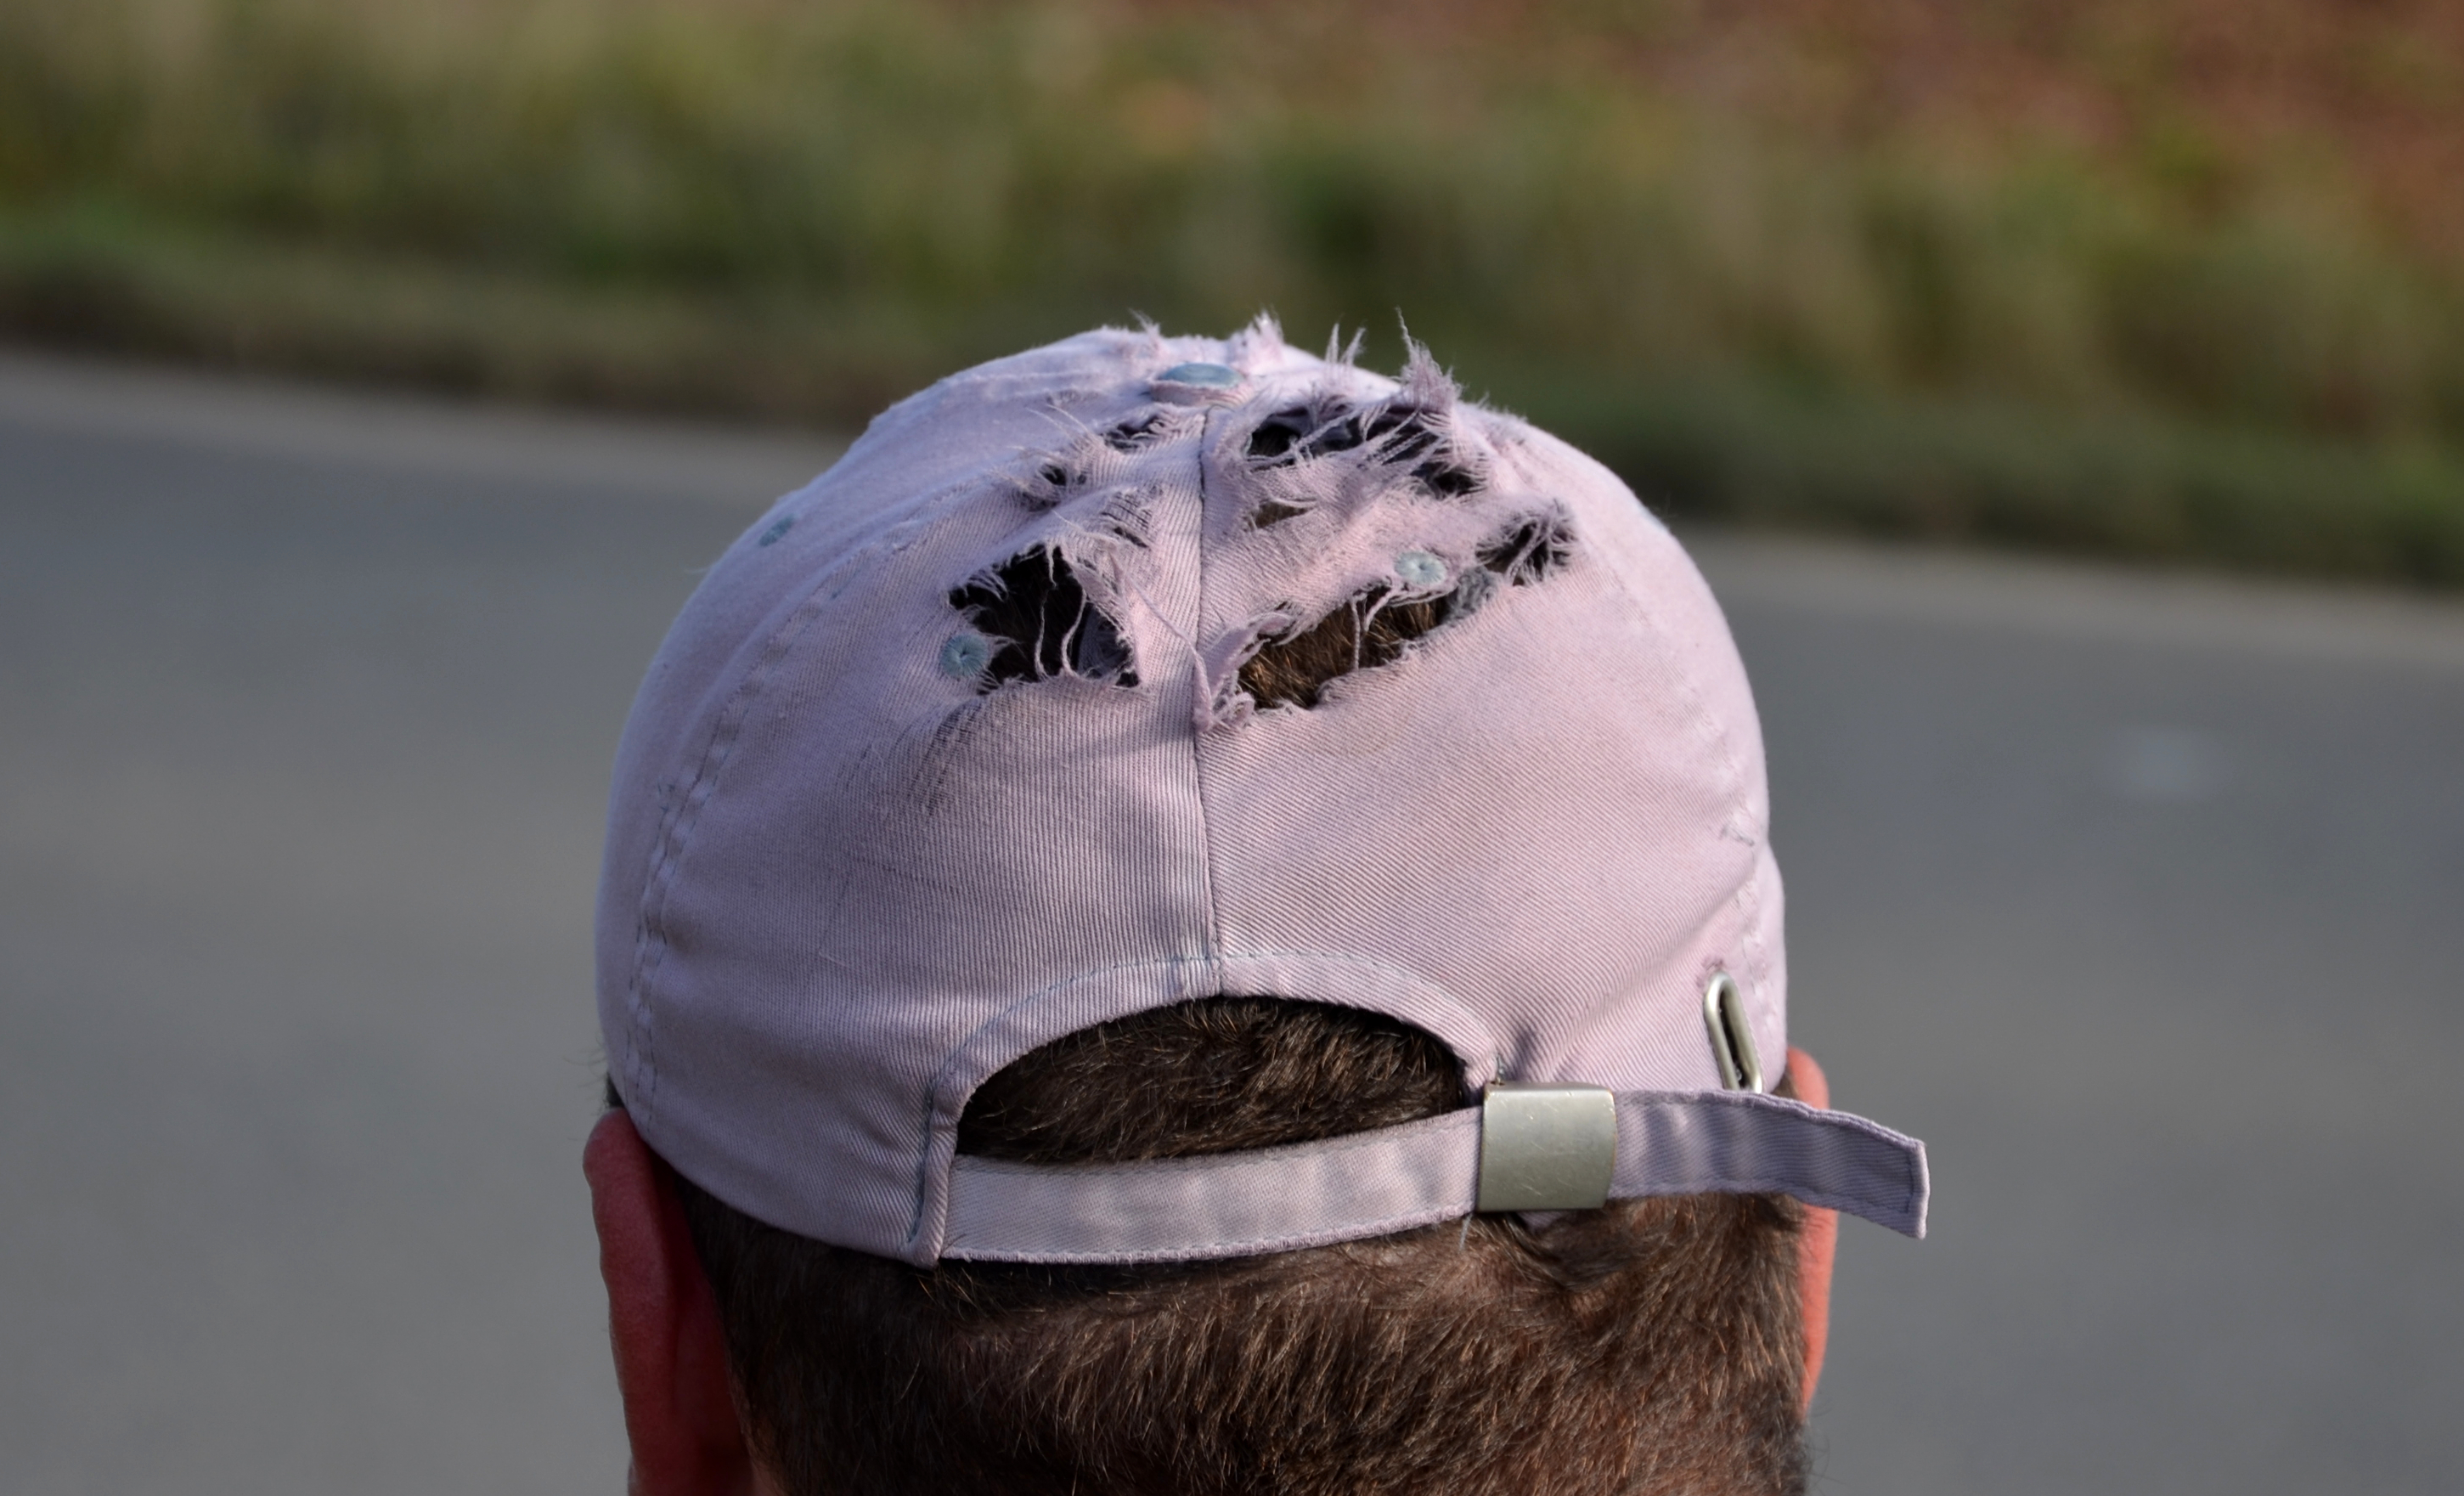 Torn baseball cap on man's head | Source: Shutterstock